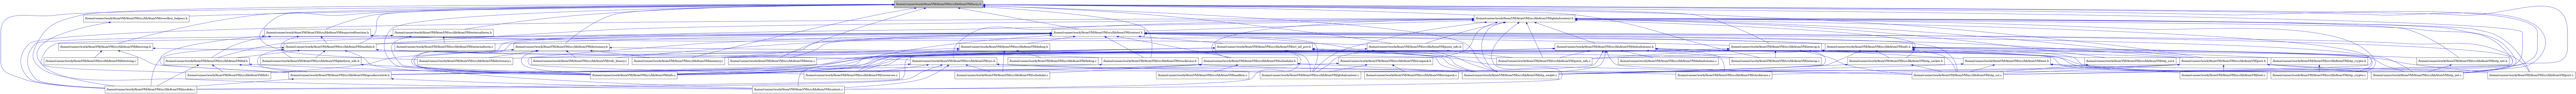 digraph {
    graph [bgcolor="#00000000"]
    node [shape=rectangle style=filled fillcolor="#FFFFFF" font=Helvetica padding=2]
    edge [color="#1414CE"]
    "10" [label="/home/runner/work/AtomVM/AtomVM/src/libAtomVM/bif.c" tooltip="/home/runner/work/AtomVM/AtomVM/src/libAtomVM/bif.c"]
    "44" [label="/home/runner/work/AtomVM/AtomVM/src/libAtomVM/dictionary.c" tooltip="/home/runner/work/AtomVM/AtomVM/src/libAtomVM/dictionary.c"]
    "9" [label="/home/runner/work/AtomVM/AtomVM/src/libAtomVM/bif.h" tooltip="/home/runner/work/AtomVM/AtomVM/src/libAtomVM/bif.h"]
    "45" [label="/home/runner/work/AtomVM/AtomVM/src/libAtomVM/dictionary.h" tooltip="/home/runner/work/AtomVM/AtomVM/src/libAtomVM/dictionary.h"]
    "3" [label="/home/runner/work/AtomVM/AtomVM/src/libAtomVM/bitstring.c" tooltip="/home/runner/work/AtomVM/AtomVM/src/libAtomVM/bitstring.c"]
    "2" [label="/home/runner/work/AtomVM/AtomVM/src/libAtomVM/bitstring.h" tooltip="/home/runner/work/AtomVM/AtomVM/src/libAtomVM/bitstring.h"]
    "31" [label="/home/runner/work/AtomVM/AtomVM/src/libAtomVM/platform_nifs.h" tooltip="/home/runner/work/AtomVM/AtomVM/src/libAtomVM/platform_nifs.h"]
    "20" [label="/home/runner/work/AtomVM/AtomVM/src/libAtomVM/posix_nifs.c" tooltip="/home/runner/work/AtomVM/AtomVM/src/libAtomVM/posix_nifs.c"]
    "47" [label="/home/runner/work/AtomVM/AtomVM/src/libAtomVM/posix_nifs.h" tooltip="/home/runner/work/AtomVM/AtomVM/src/libAtomVM/posix_nifs.h"]
    "53" [label="/home/runner/work/AtomVM/AtomVM/src/libAtomVM/defaultatoms.c" tooltip="/home/runner/work/AtomVM/AtomVM/src/libAtomVM/defaultatoms.c"]
    "52" [label="/home/runner/work/AtomVM/AtomVM/src/libAtomVM/defaultatoms.h" tooltip="/home/runner/work/AtomVM/AtomVM/src/libAtomVM/defaultatoms.h"]
    "26" [label="/home/runner/work/AtomVM/AtomVM/src/libAtomVM/inet.c" tooltip="/home/runner/work/AtomVM/AtomVM/src/libAtomVM/inet.c"]
    "25" [label="/home/runner/work/AtomVM/AtomVM/src/libAtomVM/inet.h" tooltip="/home/runner/work/AtomVM/AtomVM/src/libAtomVM/inet.h"]
    "15" [label="/home/runner/work/AtomVM/AtomVM/src/libAtomVM/scheduler.c" tooltip="/home/runner/work/AtomVM/AtomVM/src/libAtomVM/scheduler.c"]
    "42" [label="/home/runner/work/AtomVM/AtomVM/src/libAtomVM/scheduler.h" tooltip="/home/runner/work/AtomVM/AtomVM/src/libAtomVM/scheduler.h"]
    "46" [label="/home/runner/work/AtomVM/AtomVM/src/libAtomVM/exportedfunction.h" tooltip="/home/runner/work/AtomVM/AtomVM/src/libAtomVM/exportedfunction.h"]
    "6" [label="/home/runner/work/AtomVM/AtomVM/src/libAtomVM/context.c" tooltip="/home/runner/work/AtomVM/AtomVM/src/libAtomVM/context.c"]
    "8" [label="/home/runner/work/AtomVM/AtomVM/src/libAtomVM/context.h" tooltip="/home/runner/work/AtomVM/AtomVM/src/libAtomVM/context.h"]
    "40" [label="/home/runner/work/AtomVM/AtomVM/src/libAtomVM/port.c" tooltip="/home/runner/work/AtomVM/AtomVM/src/libAtomVM/port.c"]
    "41" [label="/home/runner/work/AtomVM/AtomVM/src/libAtomVM/port.h" tooltip="/home/runner/work/AtomVM/AtomVM/src/libAtomVM/port.h"]
    "54" [label="/home/runner/work/AtomVM/AtomVM/src/libAtomVM/overflow_helpers.h" tooltip="/home/runner/work/AtomVM/AtomVM/src/libAtomVM/overflow_helpers.h"]
    "33" [label="/home/runner/work/AtomVM/AtomVM/src/libAtomVM/stacktrace.c" tooltip="/home/runner/work/AtomVM/AtomVM/src/libAtomVM/stacktrace.c"]
    "32" [label="/home/runner/work/AtomVM/AtomVM/src/libAtomVM/stacktrace.h" tooltip="/home/runner/work/AtomVM/AtomVM/src/libAtomVM/stacktrace.h"]
    "21" [label="/home/runner/work/AtomVM/AtomVM/src/libAtomVM/refc_binary.c" tooltip="/home/runner/work/AtomVM/AtomVM/src/libAtomVM/refc_binary.c"]
    "43" [label="/home/runner/work/AtomVM/AtomVM/src/libAtomVM/mailbox.c" tooltip="/home/runner/work/AtomVM/AtomVM/src/libAtomVM/mailbox.c"]
    "7" [label="/home/runner/work/AtomVM/AtomVM/src/libAtomVM/module.c" tooltip="/home/runner/work/AtomVM/AtomVM/src/libAtomVM/module.c"]
    "30" [label="/home/runner/work/AtomVM/AtomVM/src/libAtomVM/module.h" tooltip="/home/runner/work/AtomVM/AtomVM/src/libAtomVM/module.h"]
    "51" [label="/home/runner/work/AtomVM/AtomVM/src/libAtomVM/avmpack.c" tooltip="/home/runner/work/AtomVM/AtomVM/src/libAtomVM/avmpack.c"]
    "50" [label="/home/runner/work/AtomVM/AtomVM/src/libAtomVM/avmpack.h" tooltip="/home/runner/work/AtomVM/AtomVM/src/libAtomVM/avmpack.h"]
    "29" [label="/home/runner/work/AtomVM/AtomVM/src/libAtomVM/term.c" tooltip="/home/runner/work/AtomVM/AtomVM/src/libAtomVM/term.c"]
    "1" [label="/home/runner/work/AtomVM/AtomVM/src/libAtomVM/term.h" tooltip="/home/runner/work/AtomVM/AtomVM/src/libAtomVM/term.h" fillcolor="#BFBFBF"]
    "4" [label="/home/runner/work/AtomVM/AtomVM/src/libAtomVM/interop.c" tooltip="/home/runner/work/AtomVM/AtomVM/src/libAtomVM/interop.c"]
    "19" [label="/home/runner/work/AtomVM/AtomVM/src/libAtomVM/otp_ssl.c" tooltip="/home/runner/work/AtomVM/AtomVM/src/libAtomVM/otp_ssl.c"]
    "24" [label="/home/runner/work/AtomVM/AtomVM/src/libAtomVM/interop.h" tooltip="/home/runner/work/AtomVM/AtomVM/src/libAtomVM/interop.h"]
    "39" [label="/home/runner/work/AtomVM/AtomVM/src/libAtomVM/otp_ssl.h" tooltip="/home/runner/work/AtomVM/AtomVM/src/libAtomVM/otp_ssl.h"]
    "22" [label="/home/runner/work/AtomVM/AtomVM/src/libAtomVM/resources.c" tooltip="/home/runner/work/AtomVM/AtomVM/src/libAtomVM/resources.c"]
    "28" [label="/home/runner/work/AtomVM/AtomVM/src/libAtomVM/otp_crypto.c" tooltip="/home/runner/work/AtomVM/AtomVM/src/libAtomVM/otp_crypto.c"]
    "36" [label="/home/runner/work/AtomVM/AtomVM/src/libAtomVM/otp_crypto.h" tooltip="/home/runner/work/AtomVM/AtomVM/src/libAtomVM/otp_crypto.h"]
    "27" [label="/home/runner/work/AtomVM/AtomVM/src/libAtomVM/otp_net.c" tooltip="/home/runner/work/AtomVM/AtomVM/src/libAtomVM/otp_net.c"]
    "37" [label="/home/runner/work/AtomVM/AtomVM/src/libAtomVM/otp_net.h" tooltip="/home/runner/work/AtomVM/AtomVM/src/libAtomVM/otp_net.h"]
    "16" [label="/home/runner/work/AtomVM/AtomVM/src/libAtomVM/erl_nif_priv.h" tooltip="/home/runner/work/AtomVM/AtomVM/src/libAtomVM/erl_nif_priv.h"]
    "34" [label="/home/runner/work/AtomVM/AtomVM/src/libAtomVM/sys.h" tooltip="/home/runner/work/AtomVM/AtomVM/src/libAtomVM/sys.h"]
    "11" [label="/home/runner/work/AtomVM/AtomVM/src/libAtomVM/nifs.c" tooltip="/home/runner/work/AtomVM/AtomVM/src/libAtomVM/nifs.c"]
    "35" [label="/home/runner/work/AtomVM/AtomVM/src/libAtomVM/nifs.h" tooltip="/home/runner/work/AtomVM/AtomVM/src/libAtomVM/nifs.h"]
    "5" [label="/home/runner/work/AtomVM/AtomVM/src/libAtomVM/opcodesswitch.h" tooltip="/home/runner/work/AtomVM/AtomVM/src/libAtomVM/opcodesswitch.h"]
    "13" [label="/home/runner/work/AtomVM/AtomVM/src/libAtomVM/debug.c" tooltip="/home/runner/work/AtomVM/AtomVM/src/libAtomVM/debug.c"]
    "12" [label="/home/runner/work/AtomVM/AtomVM/src/libAtomVM/debug.h" tooltip="/home/runner/work/AtomVM/AtomVM/src/libAtomVM/debug.h"]
    "17" [label="/home/runner/work/AtomVM/AtomVM/src/libAtomVM/globalcontext.c" tooltip="/home/runner/work/AtomVM/AtomVM/src/libAtomVM/globalcontext.c"]
    "49" [label="/home/runner/work/AtomVM/AtomVM/src/libAtomVM/globalcontext.h" tooltip="/home/runner/work/AtomVM/AtomVM/src/libAtomVM/globalcontext.h"]
    "14" [label="/home/runner/work/AtomVM/AtomVM/src/libAtomVM/memory.c" tooltip="/home/runner/work/AtomVM/AtomVM/src/libAtomVM/memory.c"]
    "18" [label="/home/runner/work/AtomVM/AtomVM/src/libAtomVM/otp_socket.c" tooltip="/home/runner/work/AtomVM/AtomVM/src/libAtomVM/otp_socket.c"]
    "38" [label="/home/runner/work/AtomVM/AtomVM/src/libAtomVM/otp_socket.h" tooltip="/home/runner/work/AtomVM/AtomVM/src/libAtomVM/otp_socket.h"]
    "23" [label="/home/runner/work/AtomVM/AtomVM/src/libAtomVM/externalterm.c" tooltip="/home/runner/work/AtomVM/AtomVM/src/libAtomVM/externalterm.c"]
    "48" [label="/home/runner/work/AtomVM/AtomVM/src/libAtomVM/externalterm.h" tooltip="/home/runner/work/AtomVM/AtomVM/src/libAtomVM/externalterm.h"]
    "9" -> "10" [dir=back tooltip="include"]
    "9" -> "7" [dir=back tooltip="include"]
    "9" -> "11" [dir=back tooltip="include"]
    "9" -> "5" [dir=back tooltip="include"]
    "45" -> "10" [dir=back tooltip="include"]
    "45" -> "6" [dir=back tooltip="include"]
    "45" -> "44" [dir=back tooltip="include"]
    "45" -> "14" [dir=back tooltip="include"]
    "45" -> "11" [dir=back tooltip="include"]
    "45" -> "18" [dir=back tooltip="include"]
    "45" -> "21" [dir=back tooltip="include"]
    "2" -> "3" [dir=back tooltip="include"]
    "2" -> "4" [dir=back tooltip="include"]
    "2" -> "5" [dir=back tooltip="include"]
    "31" -> "11" [dir=back tooltip="include"]
    "47" -> "17" [dir=back tooltip="include"]
    "47" -> "11" [dir=back tooltip="include"]
    "47" -> "18" [dir=back tooltip="include"]
    "47" -> "20" [dir=back tooltip="include"]
    "52" -> "10" [dir=back tooltip="include"]
    "52" -> "53" [dir=back tooltip="include"]
    "52" -> "44" [dir=back tooltip="include"]
    "52" -> "17" [dir=back tooltip="include"]
    "52" -> "4" [dir=back tooltip="include"]
    "52" -> "11" [dir=back tooltip="include"]
    "52" -> "5" [dir=back tooltip="include"]
    "52" -> "28" [dir=back tooltip="include"]
    "52" -> "27" [dir=back tooltip="include"]
    "52" -> "18" [dir=back tooltip="include"]
    "52" -> "19" [dir=back tooltip="include"]
    "52" -> "40" [dir=back tooltip="include"]
    "52" -> "41" [dir=back tooltip="include"]
    "52" -> "20" [dir=back tooltip="include"]
    "52" -> "22" [dir=back tooltip="include"]
    "52" -> "33" [dir=back tooltip="include"]
    "25" -> "26" [dir=back tooltip="include"]
    "25" -> "27" [dir=back tooltip="include"]
    "25" -> "18" [dir=back tooltip="include"]
    "25" -> "19" [dir=back tooltip="include"]
    "42" -> "43" [dir=back tooltip="include"]
    "42" -> "11" [dir=back tooltip="include"]
    "42" -> "5" [dir=back tooltip="include"]
    "42" -> "18" [dir=back tooltip="include"]
    "42" -> "15" [dir=back tooltip="include"]
    "46" -> "9" [dir=back tooltip="include"]
    "46" -> "30" [dir=back tooltip="include"]
    "46" -> "35" [dir=back tooltip="include"]
    "46" -> "5" [dir=back tooltip="include"]
    "46" -> "31" [dir=back tooltip="include"]
    "46" -> "47" [dir=back tooltip="include"]
    "8" -> "9" [dir=back tooltip="include"]
    "8" -> "6" [dir=back tooltip="include"]
    "8" -> "12" [dir=back tooltip="include"]
    "8" -> "16" [dir=back tooltip="include"]
    "8" -> "23" [dir=back tooltip="include"]
    "8" -> "17" [dir=back tooltip="include"]
    "8" -> "24" [dir=back tooltip="include"]
    "8" -> "14" [dir=back tooltip="include"]
    "8" -> "7" [dir=back tooltip="include"]
    "8" -> "30" [dir=back tooltip="include"]
    "8" -> "11" [dir=back tooltip="include"]
    "8" -> "35" [dir=back tooltip="include"]
    "8" -> "28" [dir=back tooltip="include"]
    "8" -> "27" [dir=back tooltip="include"]
    "8" -> "18" [dir=back tooltip="include"]
    "8" -> "19" [dir=back tooltip="include"]
    "8" -> "40" [dir=back tooltip="include"]
    "8" -> "41" [dir=back tooltip="include"]
    "8" -> "21" [dir=back tooltip="include"]
    "8" -> "22" [dir=back tooltip="include"]
    "8" -> "42" [dir=back tooltip="include"]
    "8" -> "32" [dir=back tooltip="include"]
    "8" -> "29" [dir=back tooltip="include"]
    "41" -> "26" [dir=back tooltip="include"]
    "41" -> "11" [dir=back tooltip="include"]
    "41" -> "27" [dir=back tooltip="include"]
    "41" -> "18" [dir=back tooltip="include"]
    "41" -> "19" [dir=back tooltip="include"]
    "41" -> "40" [dir=back tooltip="include"]
    "54" -> "10" [dir=back tooltip="include"]
    "32" -> "5" [dir=back tooltip="include"]
    "32" -> "33" [dir=back tooltip="include"]
    "30" -> "9" [dir=back tooltip="include"]
    "30" -> "7" [dir=back tooltip="include"]
    "30" -> "11" [dir=back tooltip="include"]
    "30" -> "5" [dir=back tooltip="include"]
    "30" -> "31" [dir=back tooltip="include"]
    "30" -> "32" [dir=back tooltip="include"]
    "30" -> "34" [dir=back tooltip="include"]
    "50" -> "51" [dir=back tooltip="include"]
    "50" -> "17" [dir=back tooltip="include"]
    "50" -> "11" [dir=back tooltip="include"]
    "1" -> "2" [dir=back tooltip="include"]
    "1" -> "6" [dir=back tooltip="include"]
    "1" -> "8" [dir=back tooltip="include"]
    "1" -> "44" [dir=back tooltip="include"]
    "1" -> "45" [dir=back tooltip="include"]
    "1" -> "46" [dir=back tooltip="include"]
    "1" -> "48" [dir=back tooltip="include"]
    "1" -> "49" [dir=back tooltip="include"]
    "1" -> "26" [dir=back tooltip="include"]
    "1" -> "4" [dir=back tooltip="include"]
    "1" -> "24" [dir=back tooltip="include"]
    "1" -> "14" [dir=back tooltip="include"]
    "1" -> "7" [dir=back tooltip="include"]
    "1" -> "30" [dir=back tooltip="include"]
    "1" -> "11" [dir=back tooltip="include"]
    "1" -> "28" [dir=back tooltip="include"]
    "1" -> "27" [dir=back tooltip="include"]
    "1" -> "18" [dir=back tooltip="include"]
    "1" -> "19" [dir=back tooltip="include"]
    "1" -> "54" [dir=back tooltip="include"]
    "1" -> "41" [dir=back tooltip="include"]
    "1" -> "47" [dir=back tooltip="include"]
    "1" -> "32" [dir=back tooltip="include"]
    "1" -> "29" [dir=back tooltip="include"]
    "24" -> "25" [dir=back tooltip="include"]
    "24" -> "4" [dir=back tooltip="include"]
    "24" -> "11" [dir=back tooltip="include"]
    "24" -> "28" [dir=back tooltip="include"]
    "24" -> "27" [dir=back tooltip="include"]
    "24" -> "18" [dir=back tooltip="include"]
    "24" -> "19" [dir=back tooltip="include"]
    "24" -> "20" [dir=back tooltip="include"]
    "24" -> "29" [dir=back tooltip="include"]
    "39" -> "19" [dir=back tooltip="include"]
    "36" -> "28" [dir=back tooltip="include"]
    "37" -> "27" [dir=back tooltip="include"]
    "16" -> "6" [dir=back tooltip="include"]
    "16" -> "17" [dir=back tooltip="include"]
    "16" -> "14" [dir=back tooltip="include"]
    "16" -> "18" [dir=back tooltip="include"]
    "16" -> "19" [dir=back tooltip="include"]
    "16" -> "20" [dir=back tooltip="include"]
    "16" -> "21" [dir=back tooltip="include"]
    "16" -> "22" [dir=back tooltip="include"]
    "34" -> "6" [dir=back tooltip="include"]
    "34" -> "17" [dir=back tooltip="include"]
    "34" -> "7" [dir=back tooltip="include"]
    "34" -> "11" [dir=back tooltip="include"]
    "34" -> "18" [dir=back tooltip="include"]
    "34" -> "22" [dir=back tooltip="include"]
    "34" -> "15" [dir=back tooltip="include"]
    "35" -> "7" [dir=back tooltip="include"]
    "35" -> "11" [dir=back tooltip="include"]
    "35" -> "5" [dir=back tooltip="include"]
    "35" -> "28" [dir=back tooltip="include"]
    "35" -> "36" [dir=back tooltip="include"]
    "35" -> "27" [dir=back tooltip="include"]
    "35" -> "37" [dir=back tooltip="include"]
    "35" -> "18" [dir=back tooltip="include"]
    "35" -> "38" [dir=back tooltip="include"]
    "35" -> "19" [dir=back tooltip="include"]
    "35" -> "39" [dir=back tooltip="include"]
    "35" -> "20" [dir=back tooltip="include"]
    "5" -> "6" [dir=back tooltip="include"]
    "5" -> "7" [dir=back tooltip="include"]
    "12" -> "13" [dir=back tooltip="include"]
    "12" -> "14" [dir=back tooltip="include"]
    "12" -> "5" [dir=back tooltip="include"]
    "12" -> "15" [dir=back tooltip="include"]
    "49" -> "50" [dir=back tooltip="include"]
    "49" -> "6" [dir=back tooltip="include"]
    "49" -> "8" [dir=back tooltip="include"]
    "49" -> "52" [dir=back tooltip="include"]
    "49" -> "17" [dir=back tooltip="include"]
    "49" -> "7" [dir=back tooltip="include"]
    "49" -> "30" [dir=back tooltip="include"]
    "49" -> "11" [dir=back tooltip="include"]
    "49" -> "28" [dir=back tooltip="include"]
    "49" -> "27" [dir=back tooltip="include"]
    "49" -> "37" [dir=back tooltip="include"]
    "49" -> "18" [dir=back tooltip="include"]
    "49" -> "38" [dir=back tooltip="include"]
    "49" -> "19" [dir=back tooltip="include"]
    "49" -> "39" [dir=back tooltip="include"]
    "49" -> "40" [dir=back tooltip="include"]
    "49" -> "41" [dir=back tooltip="include"]
    "49" -> "20" [dir=back tooltip="include"]
    "49" -> "47" [dir=back tooltip="include"]
    "49" -> "42" [dir=back tooltip="include"]
    "49" -> "33" [dir=back tooltip="include"]
    "49" -> "34" [dir=back tooltip="include"]
    "38" -> "18" [dir=back tooltip="include"]
    "38" -> "19" [dir=back tooltip="include"]
    "48" -> "23" [dir=back tooltip="include"]
    "48" -> "7" [dir=back tooltip="include"]
    "48" -> "11" [dir=back tooltip="include"]
}